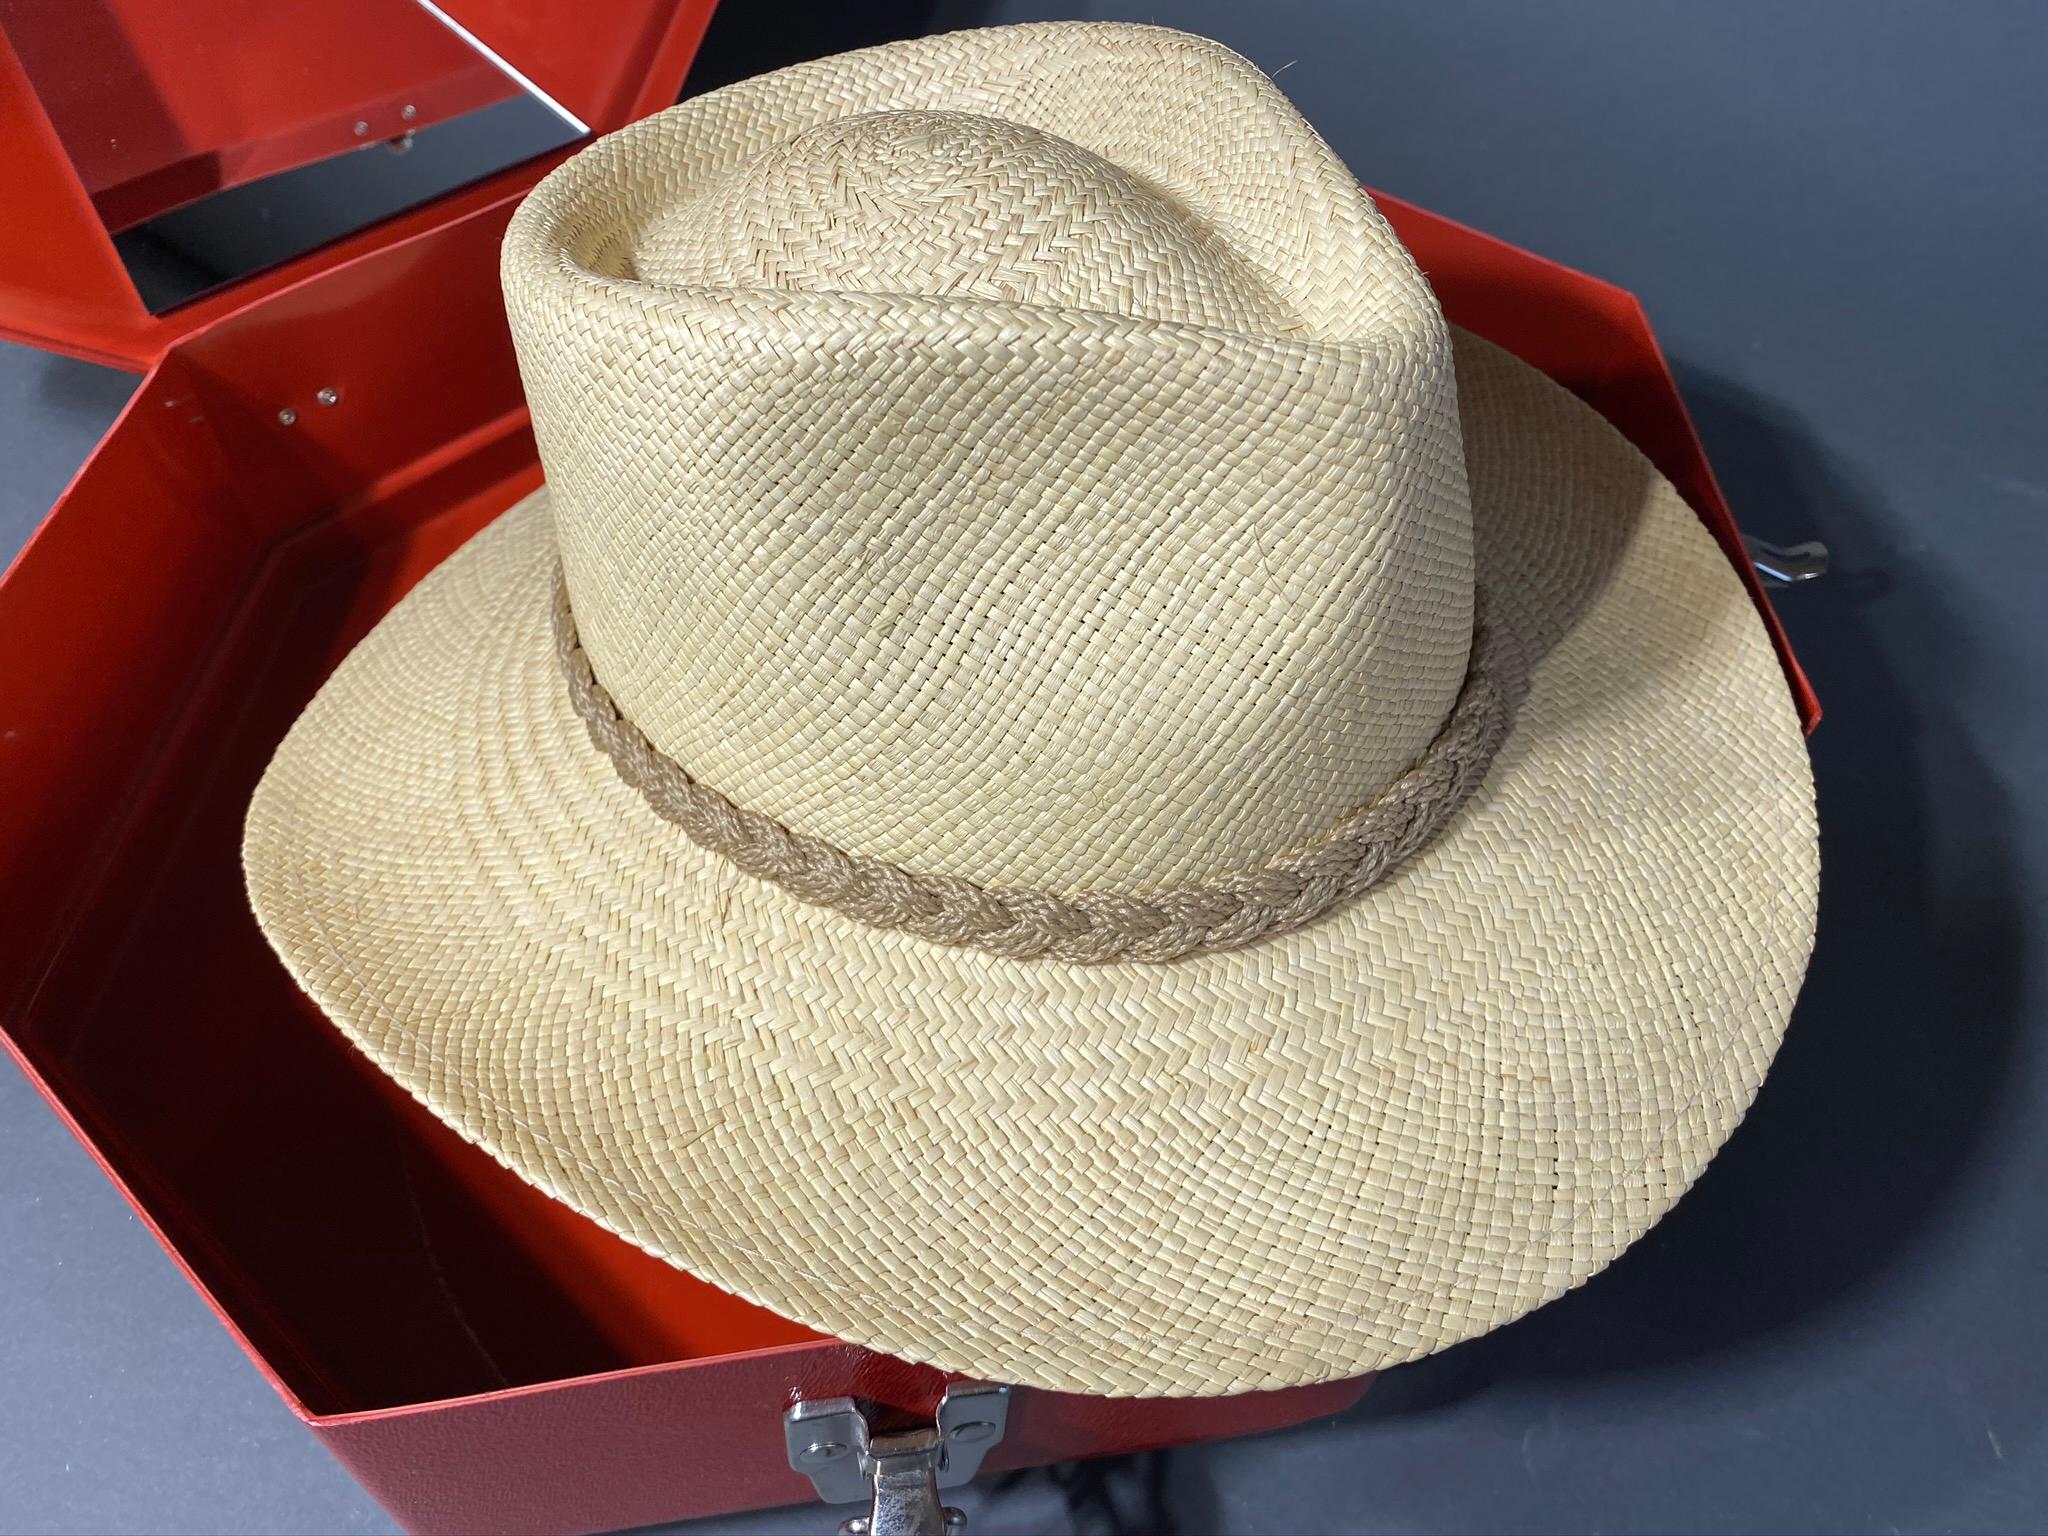 Vintage Scala Panama Hat in Box